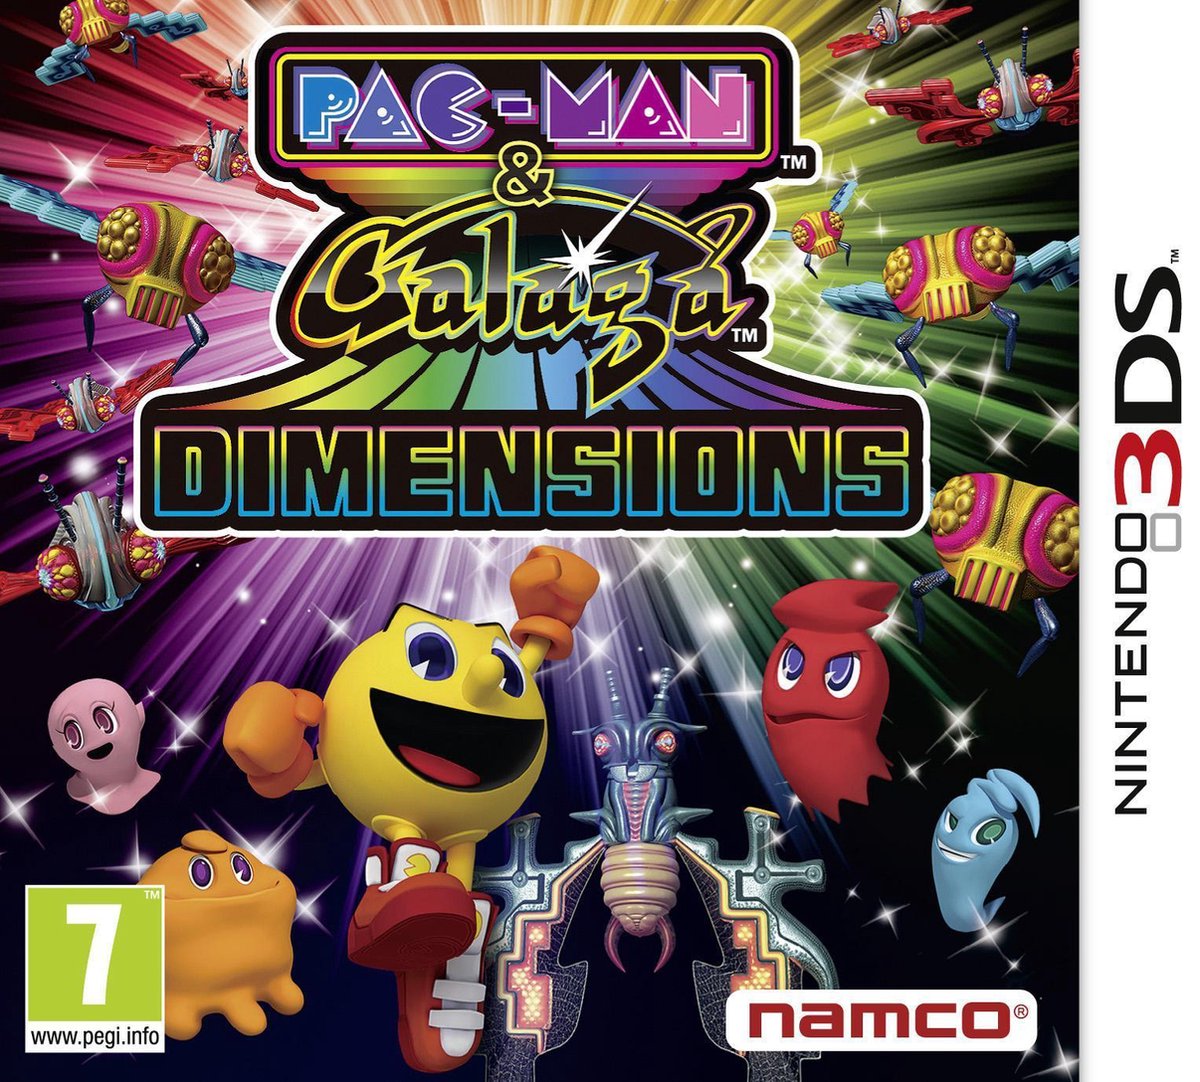 Namco Pac-Man & Galaga Dimensions